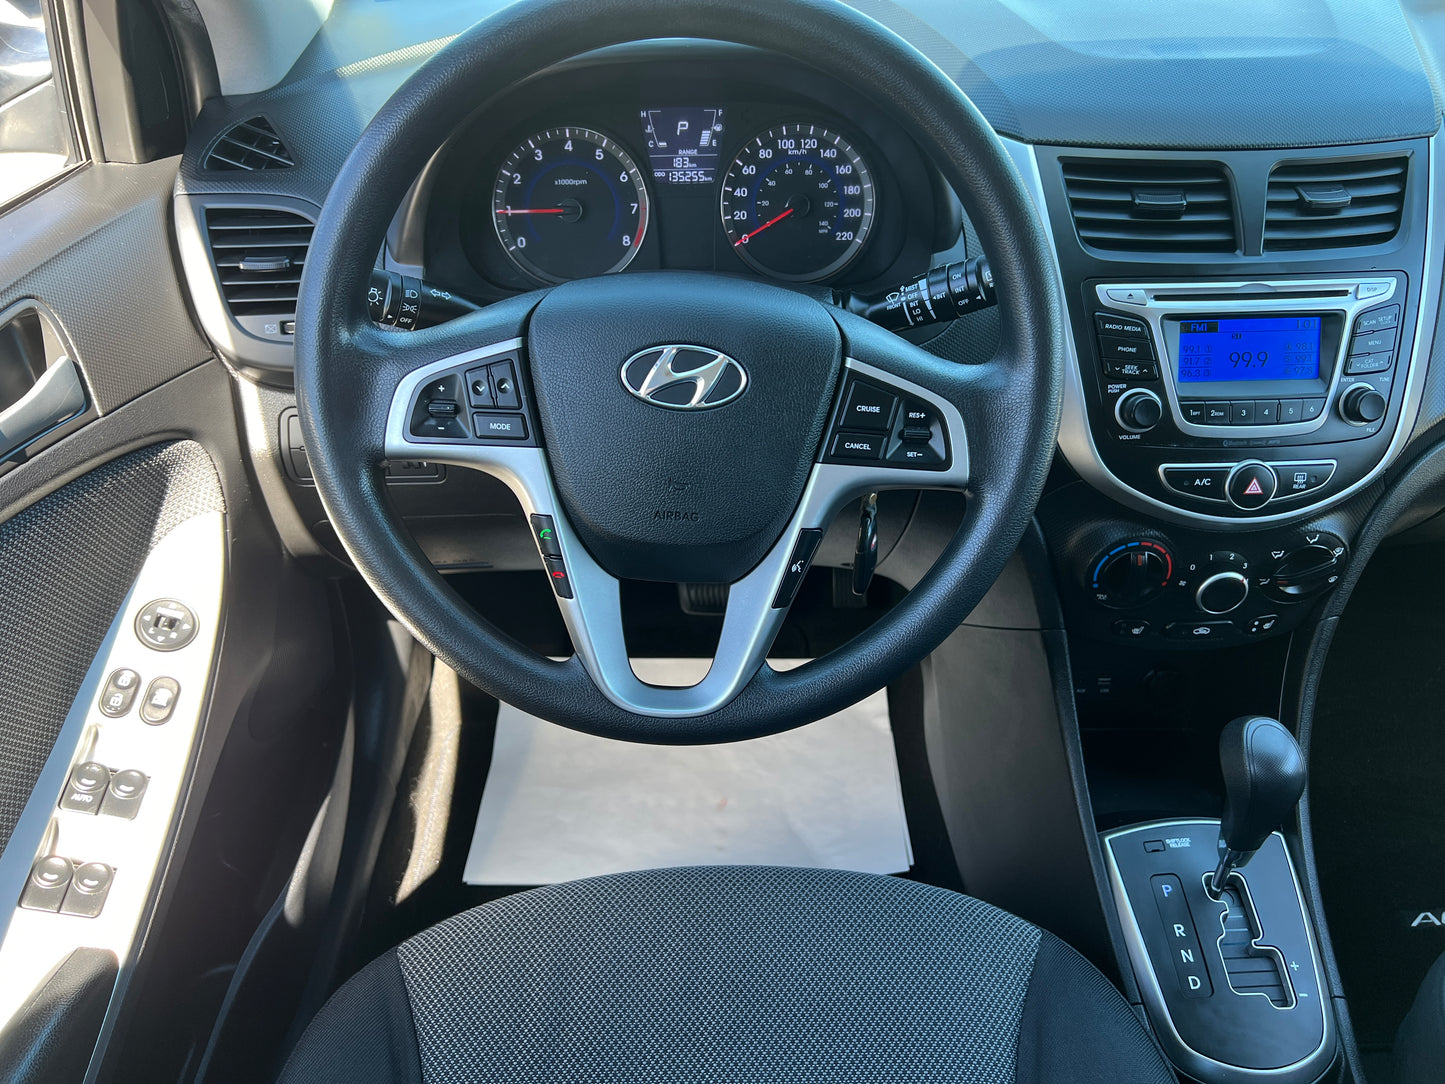 2014 Hyundai Accent GL